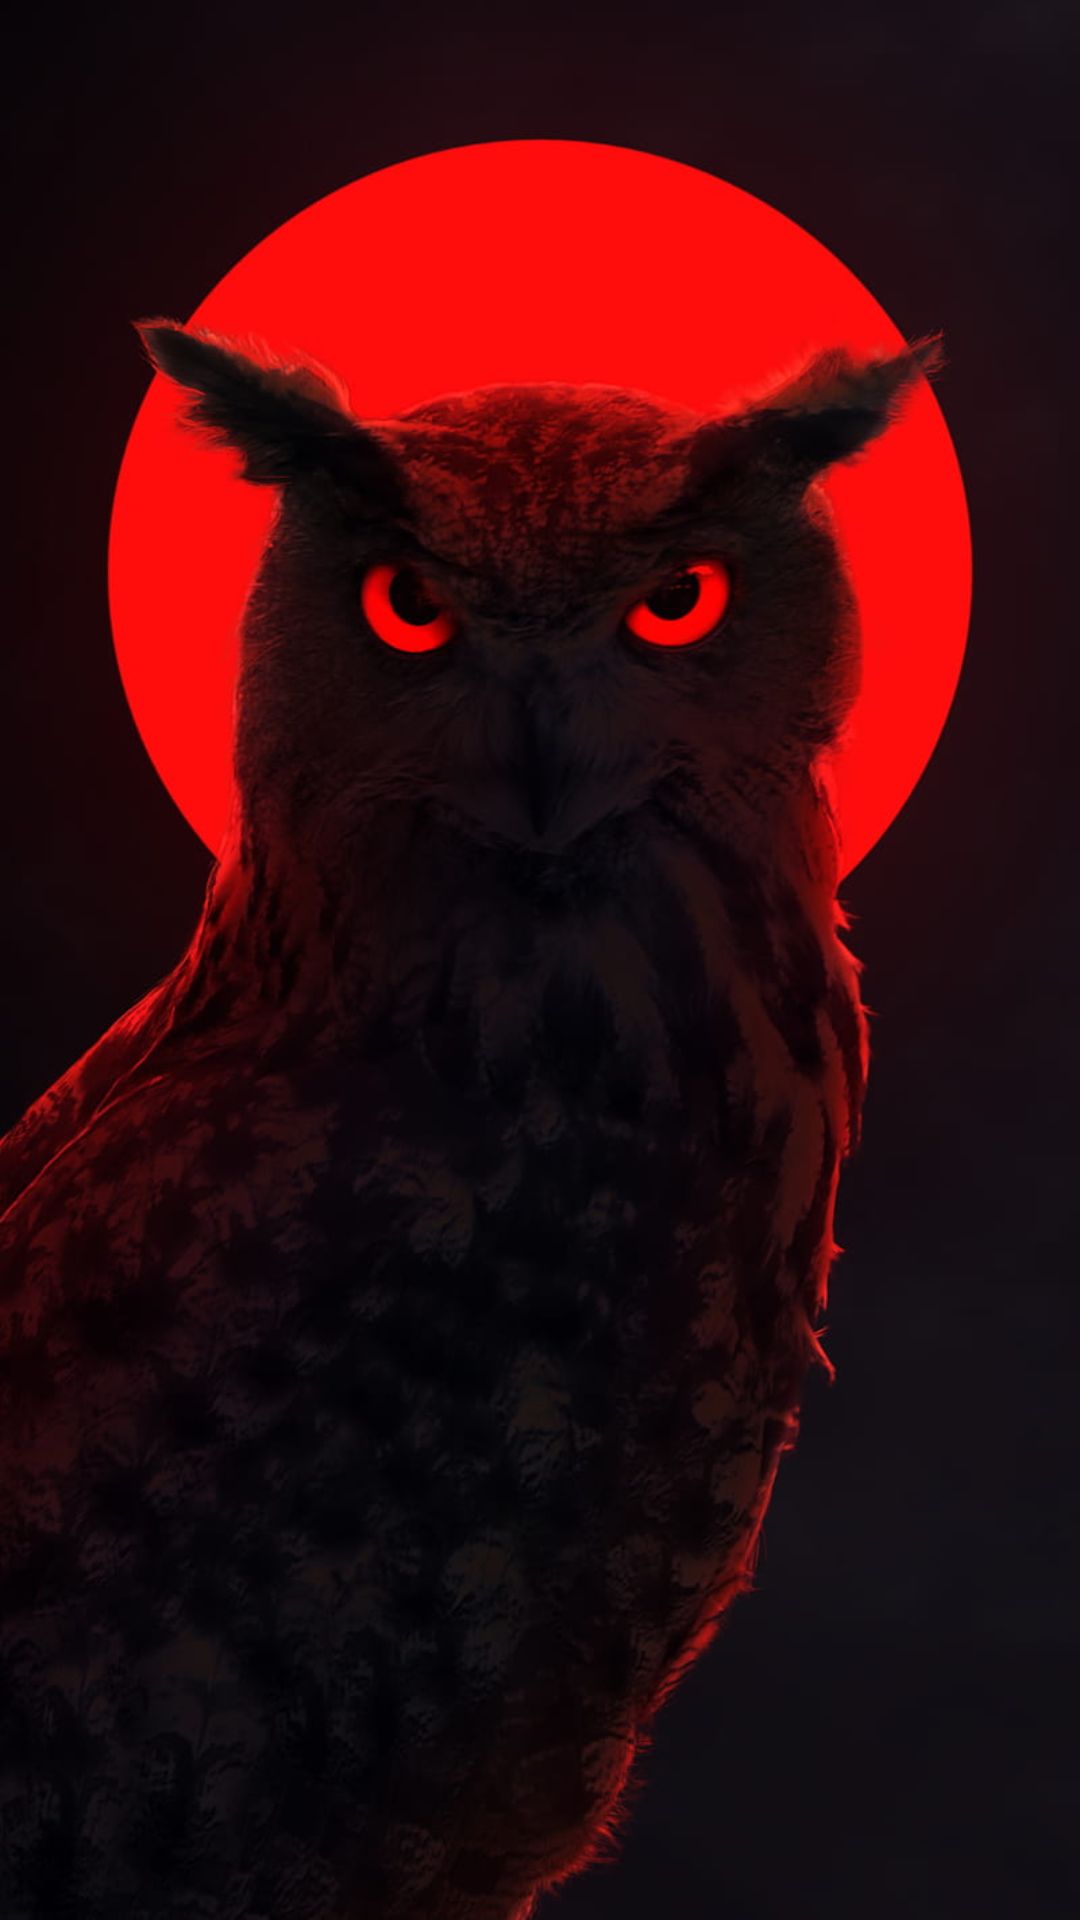 Owl iPhone Wallpaper HD